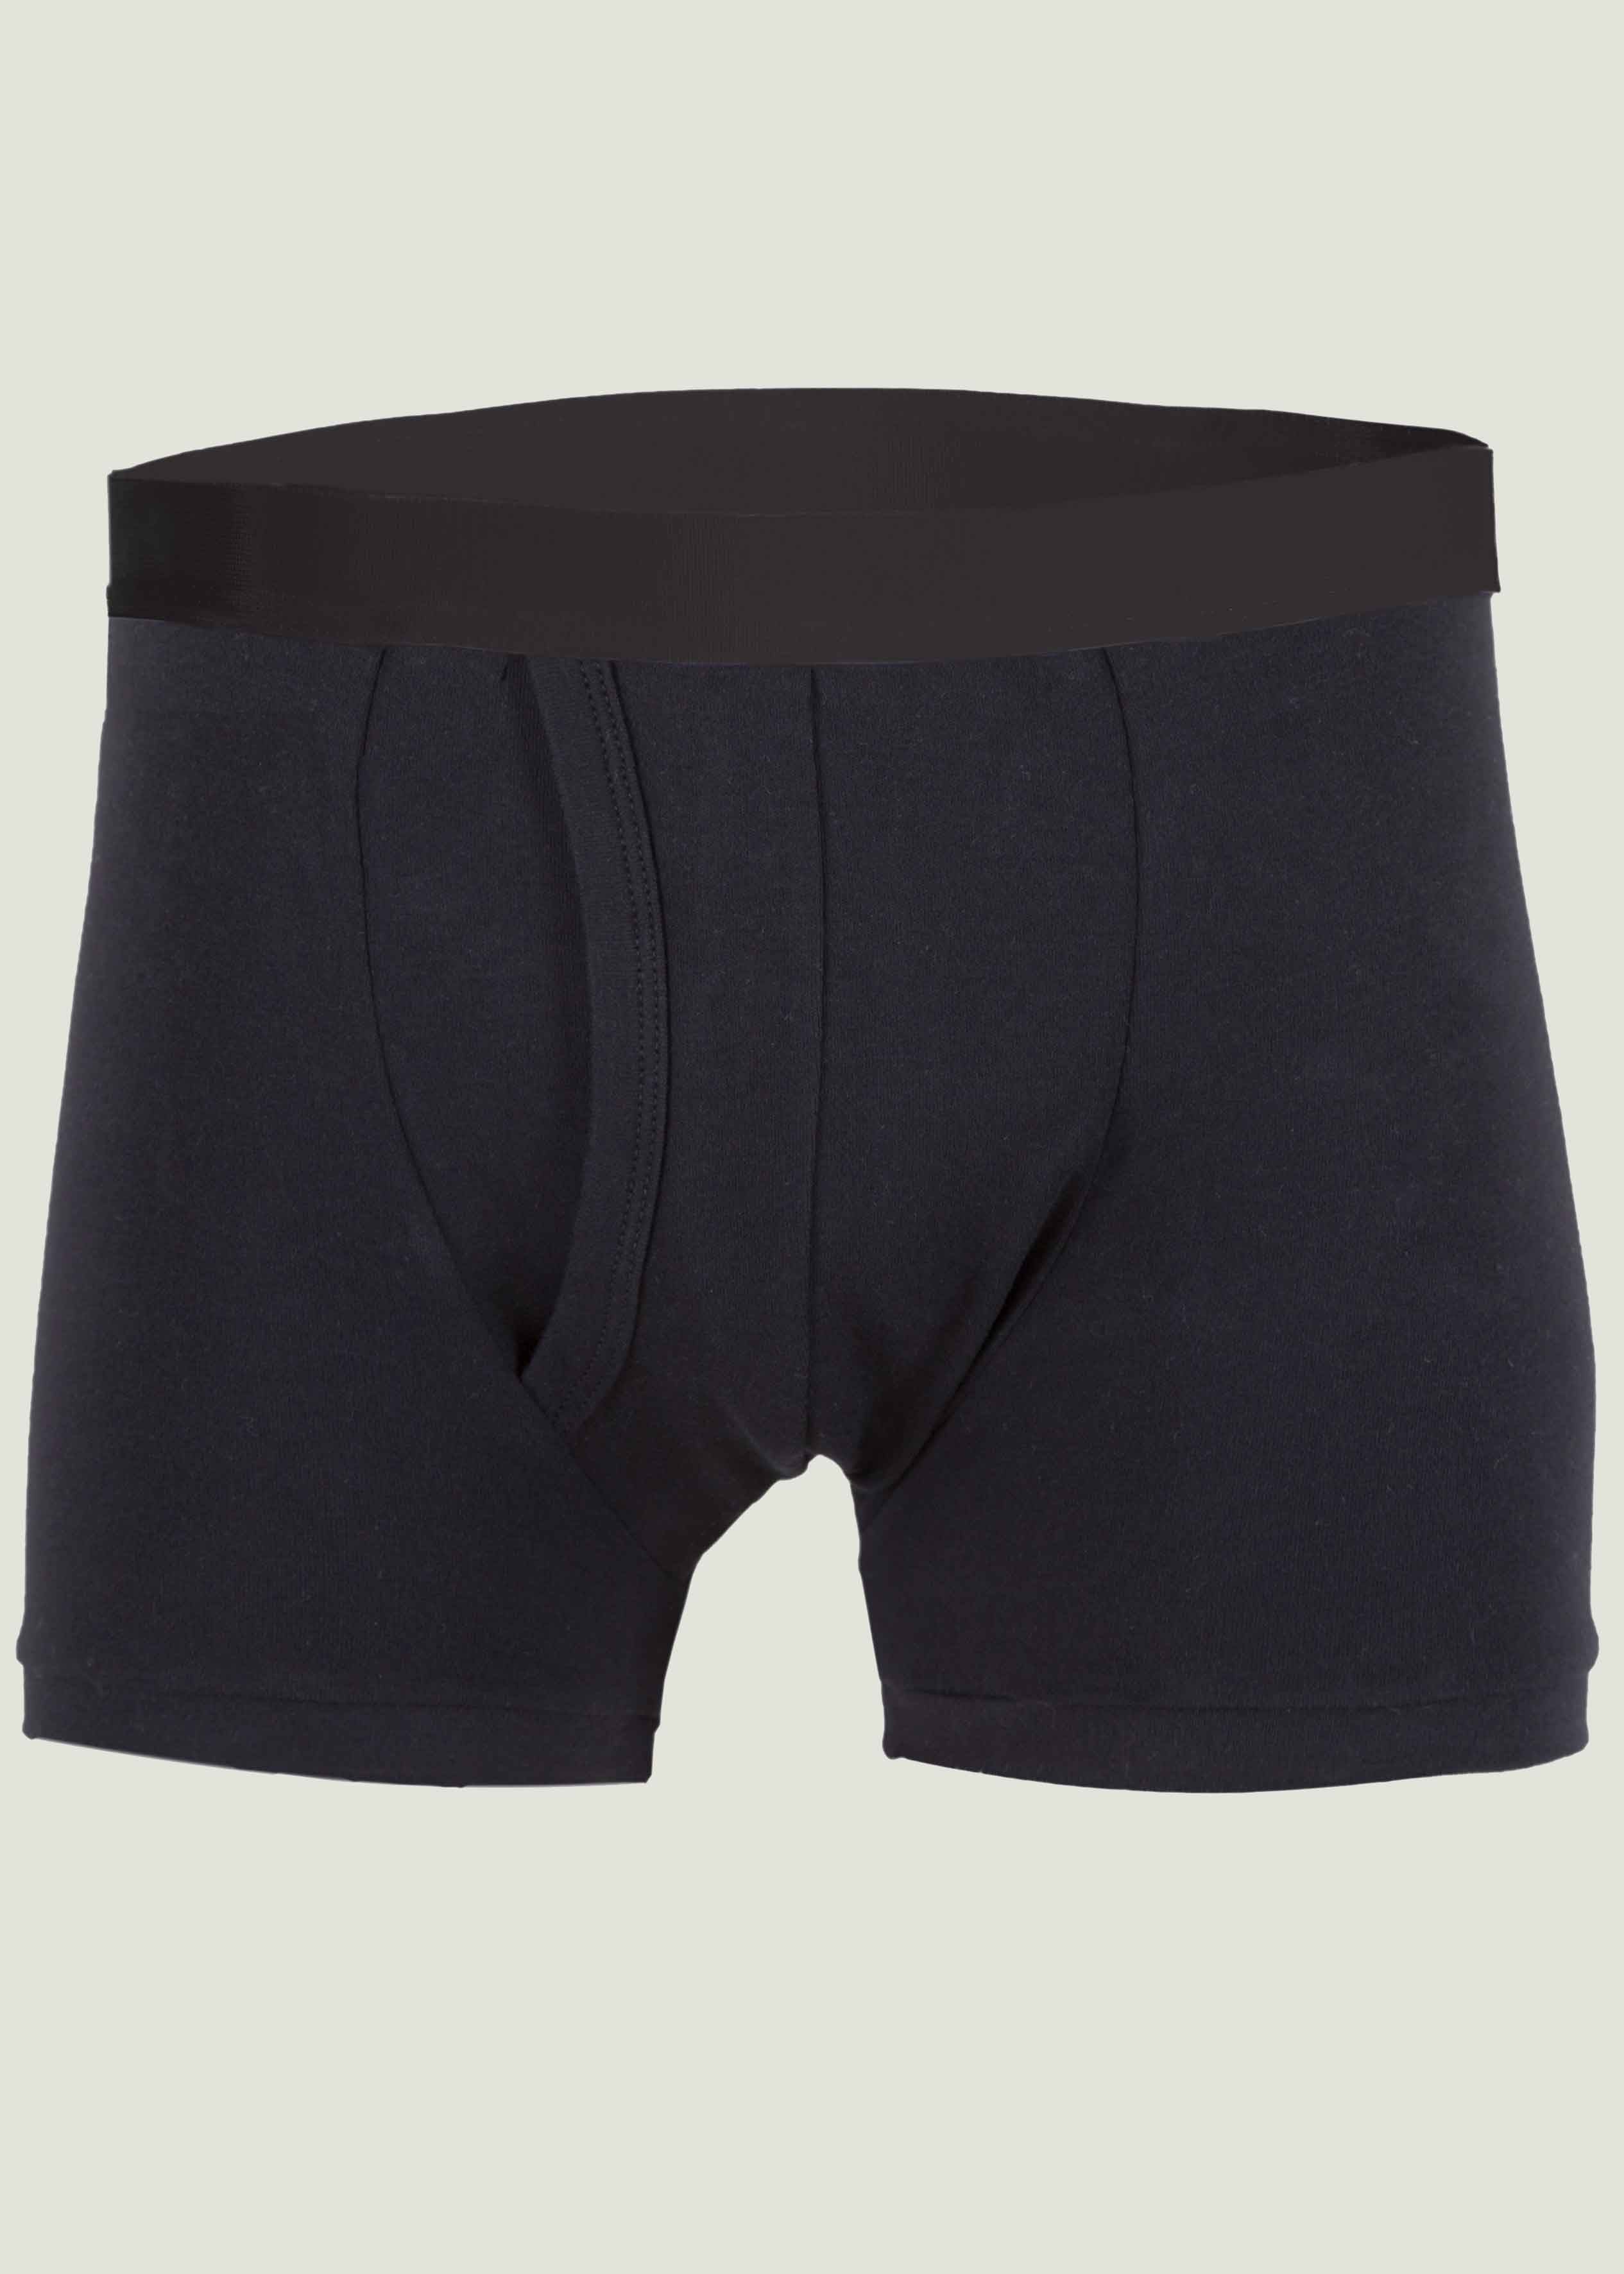 Washable Incontinence Underwear | Boxer Short | Trunk | Black | The ...